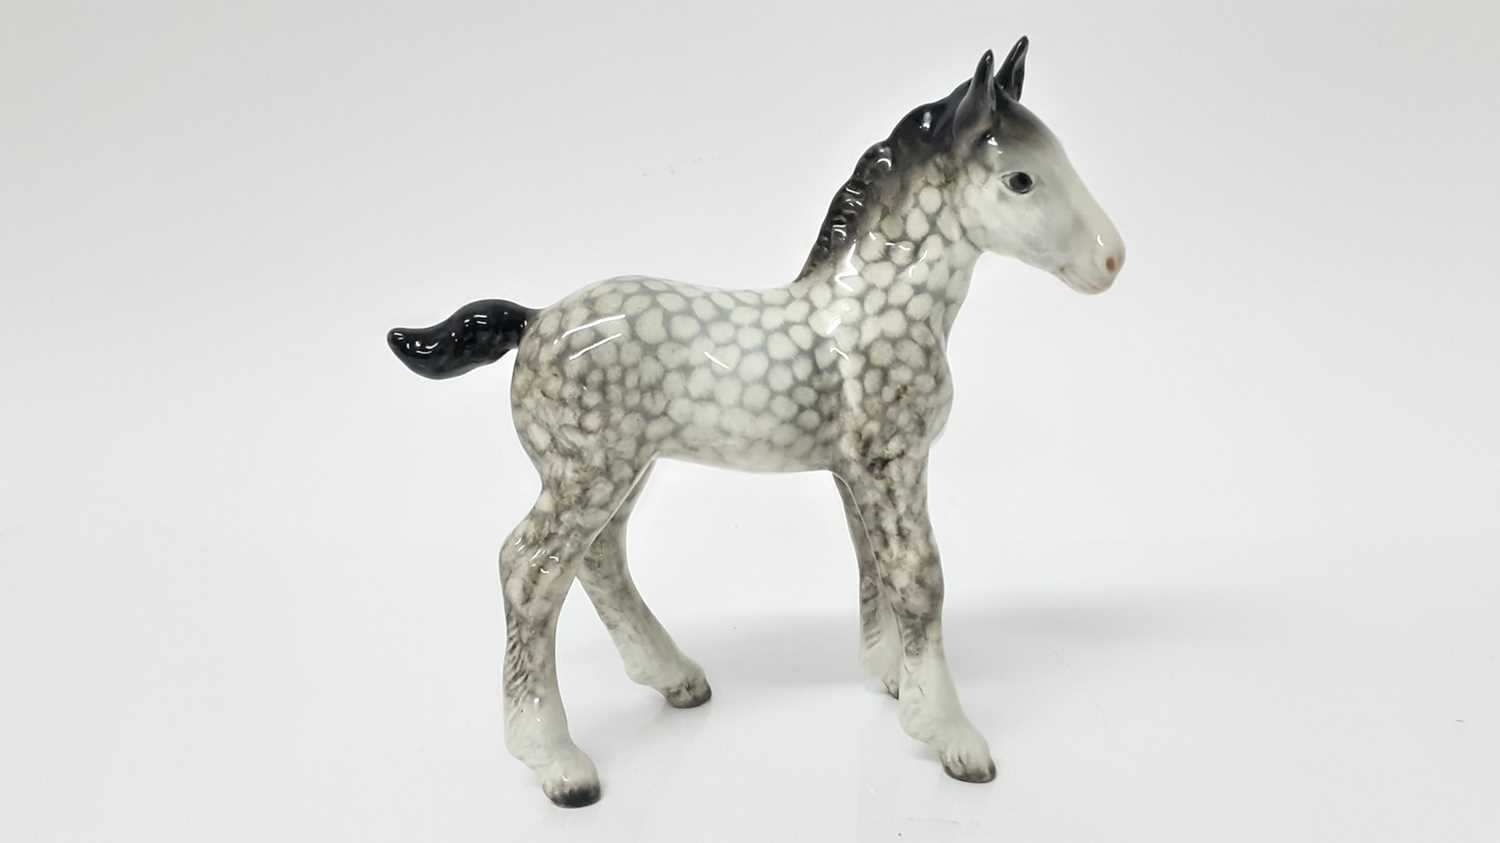 Lot 28 - Beswick Rocking Horse Grey Shire Foal, model no. 951, designed by Arthur Gredington, 15.9cm high